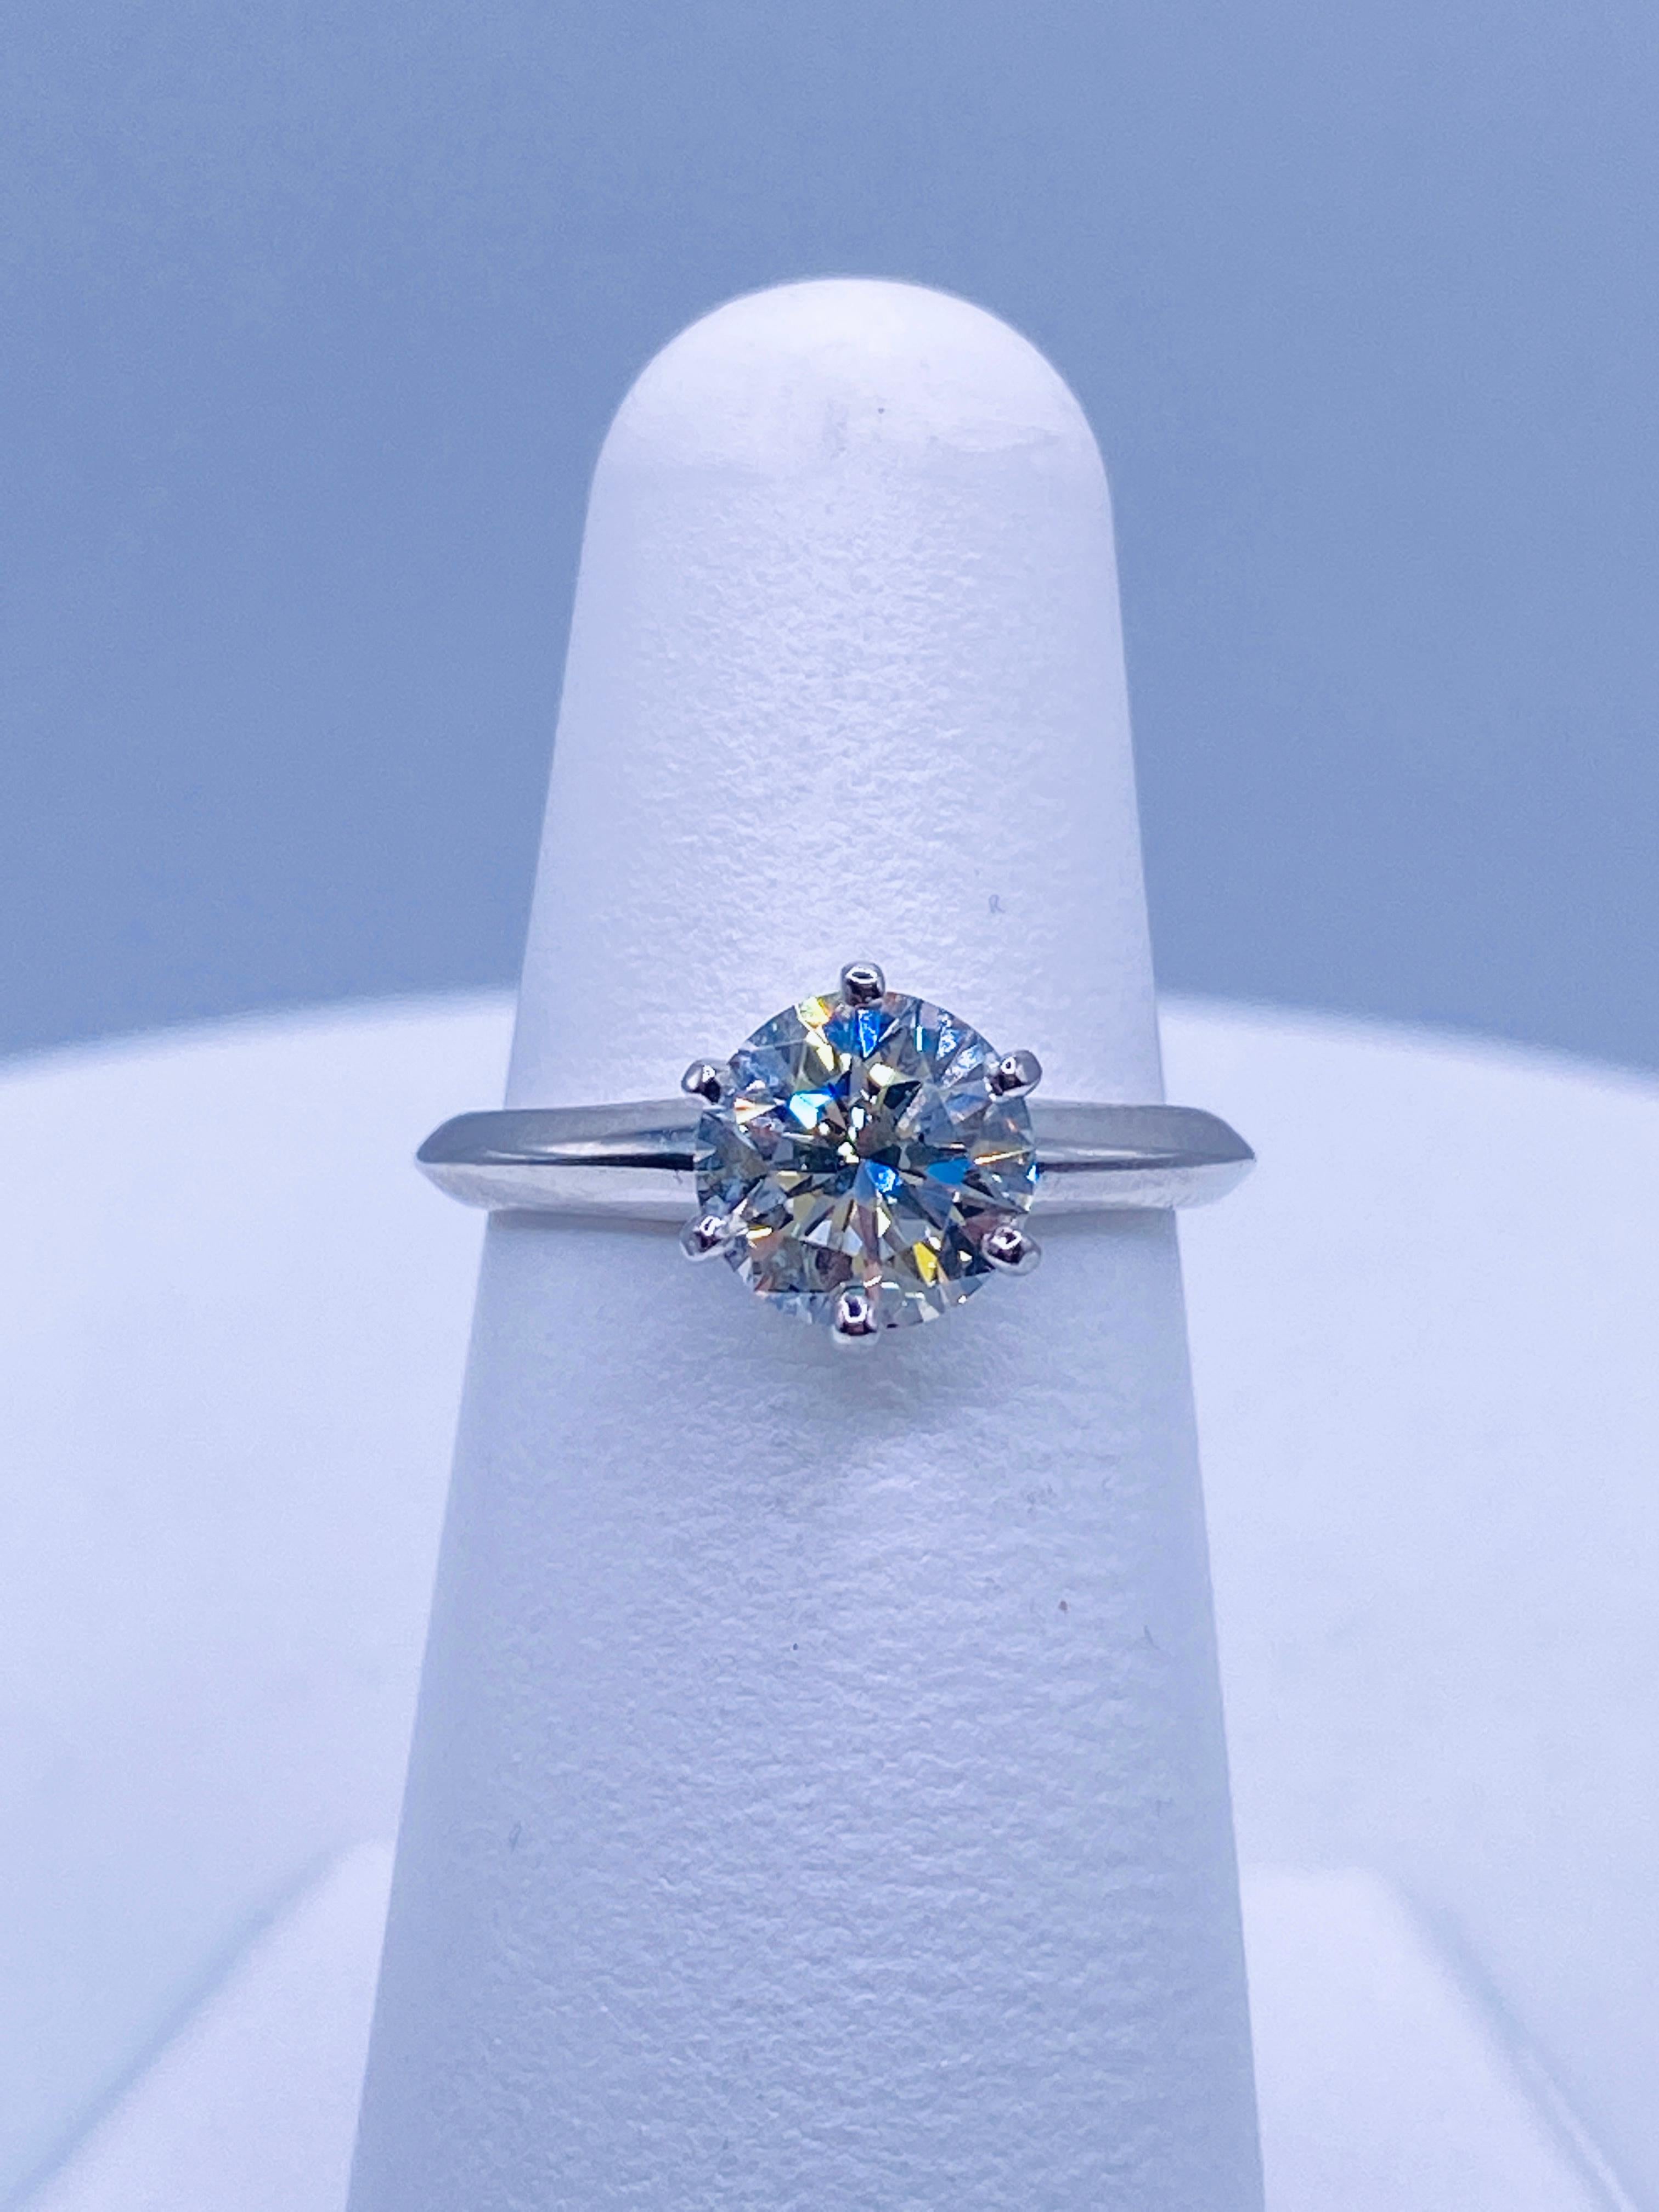 Tiffany & Co 1.27 carat I/VS2 round brilliant cut diamond solitaire engagement ring in platinum. Size 5.25